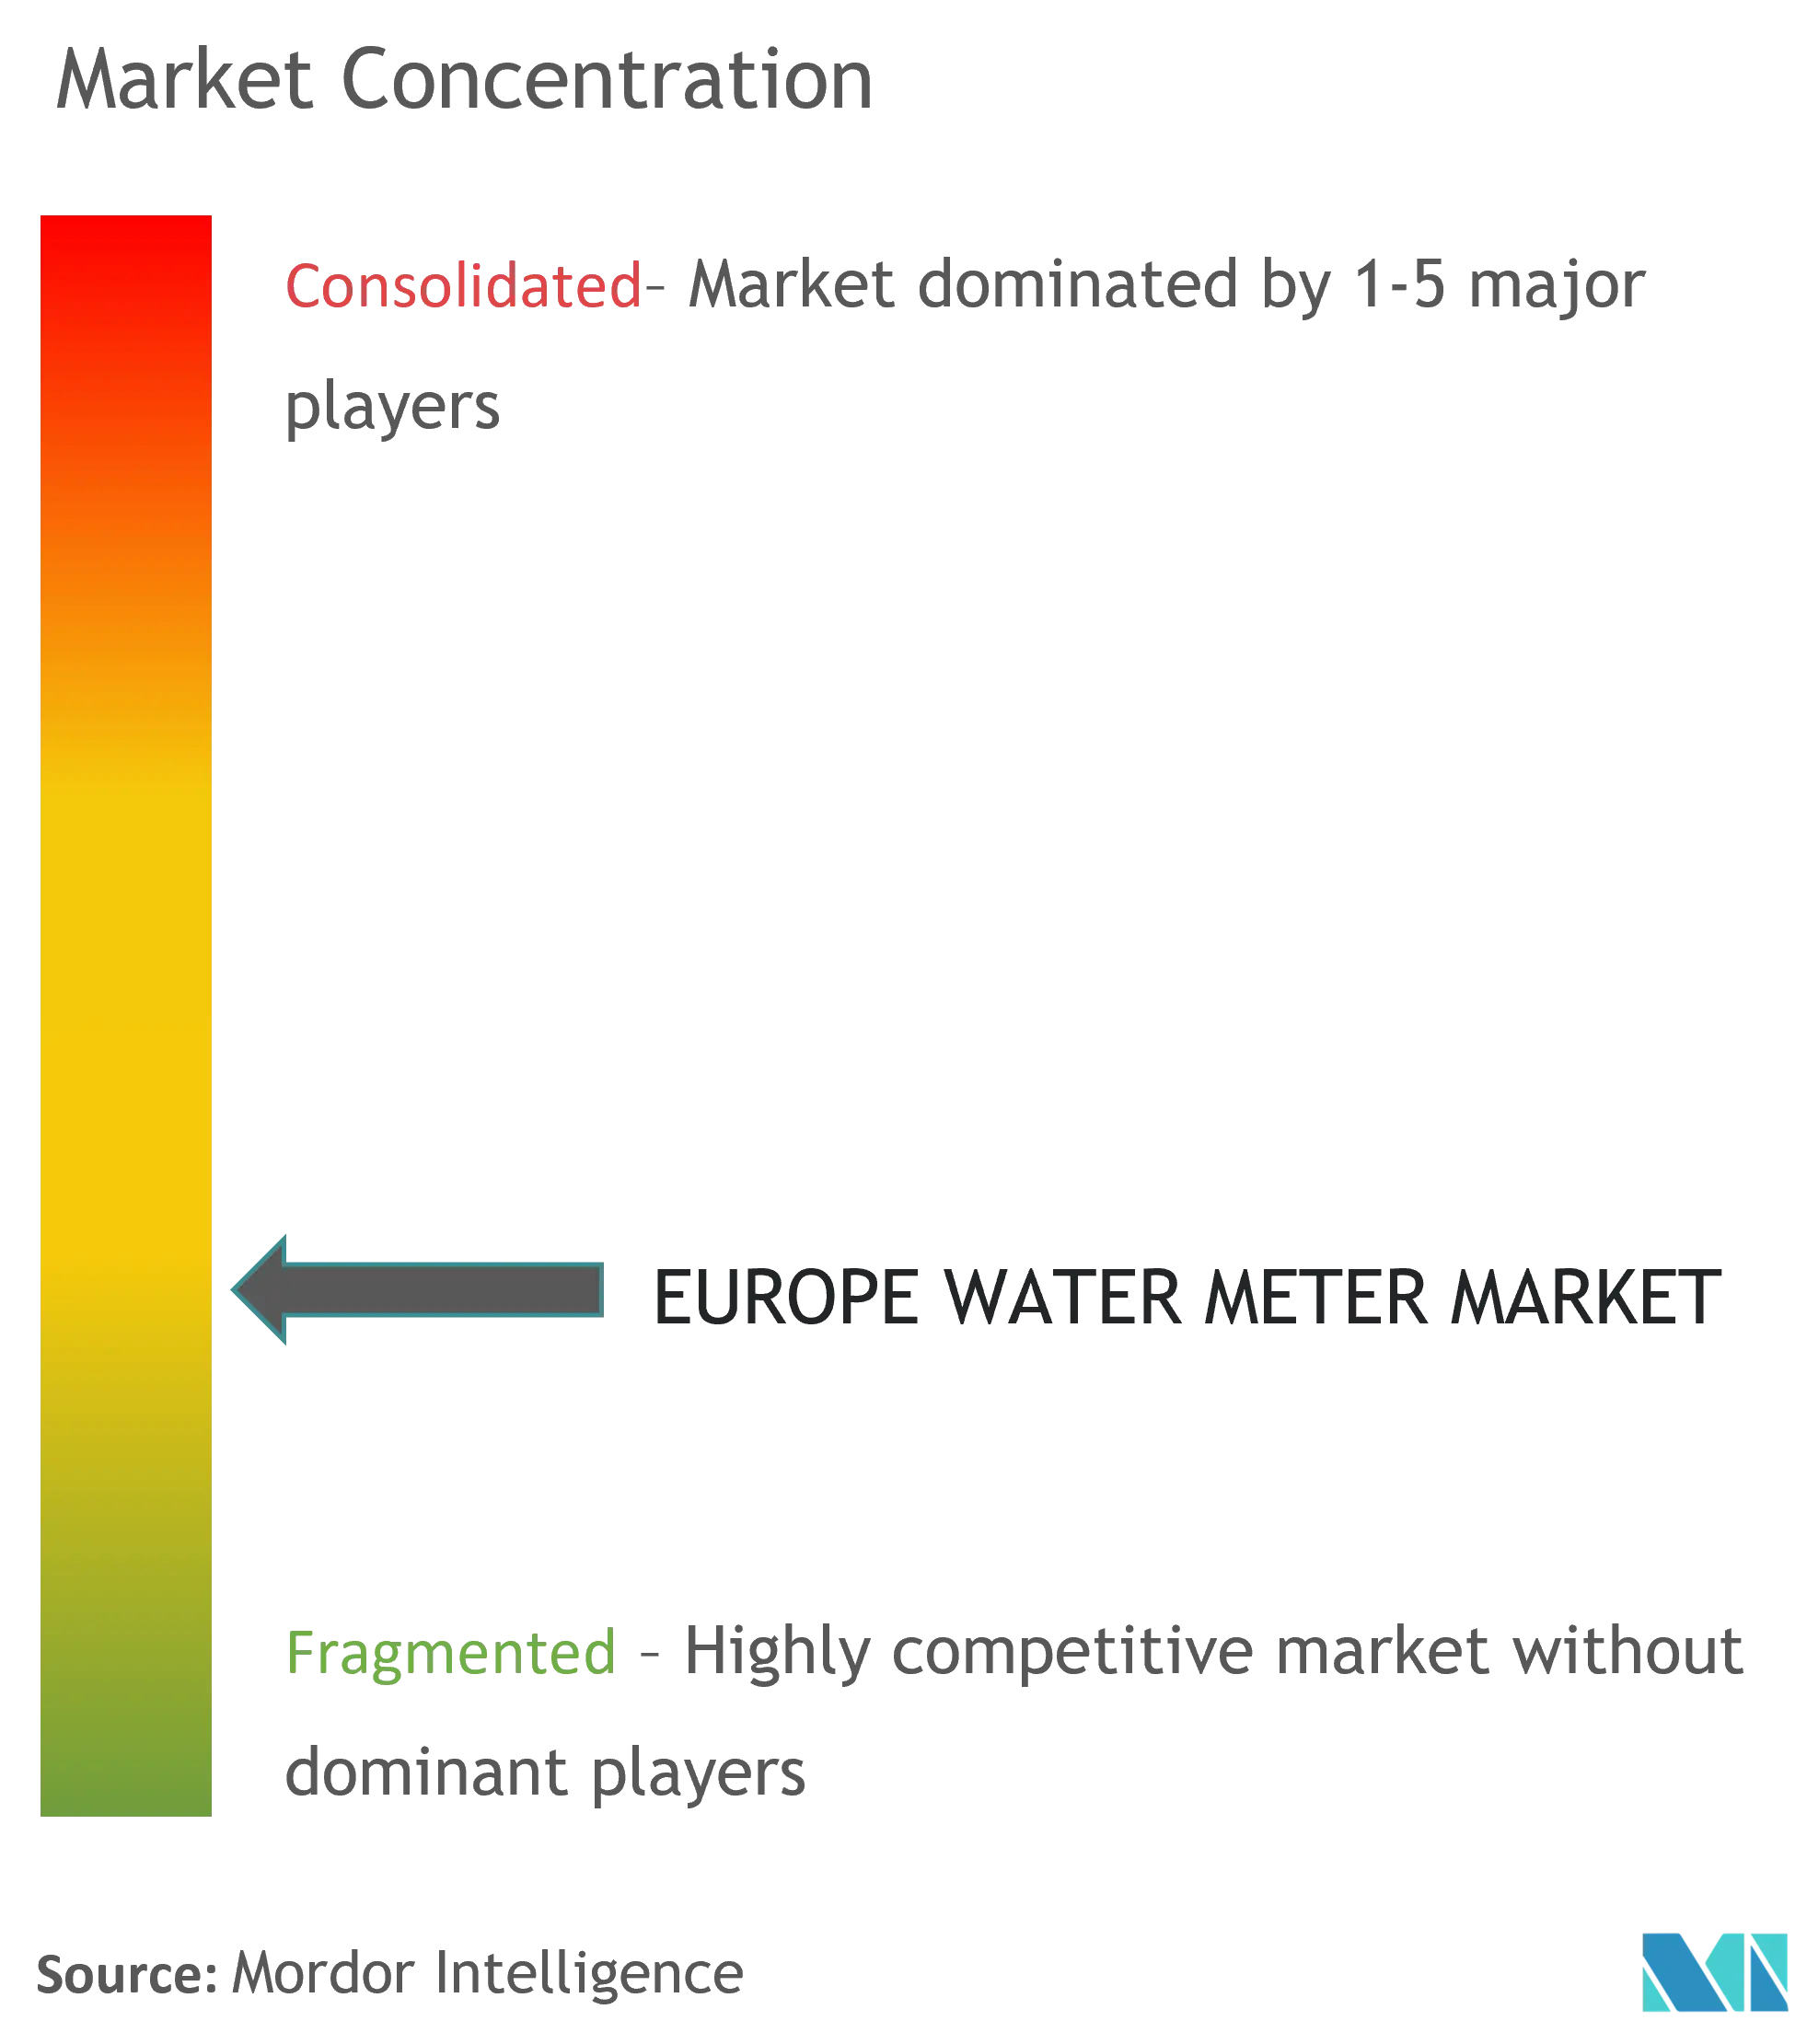 Europe Water Meter Market - Market Concentration.png